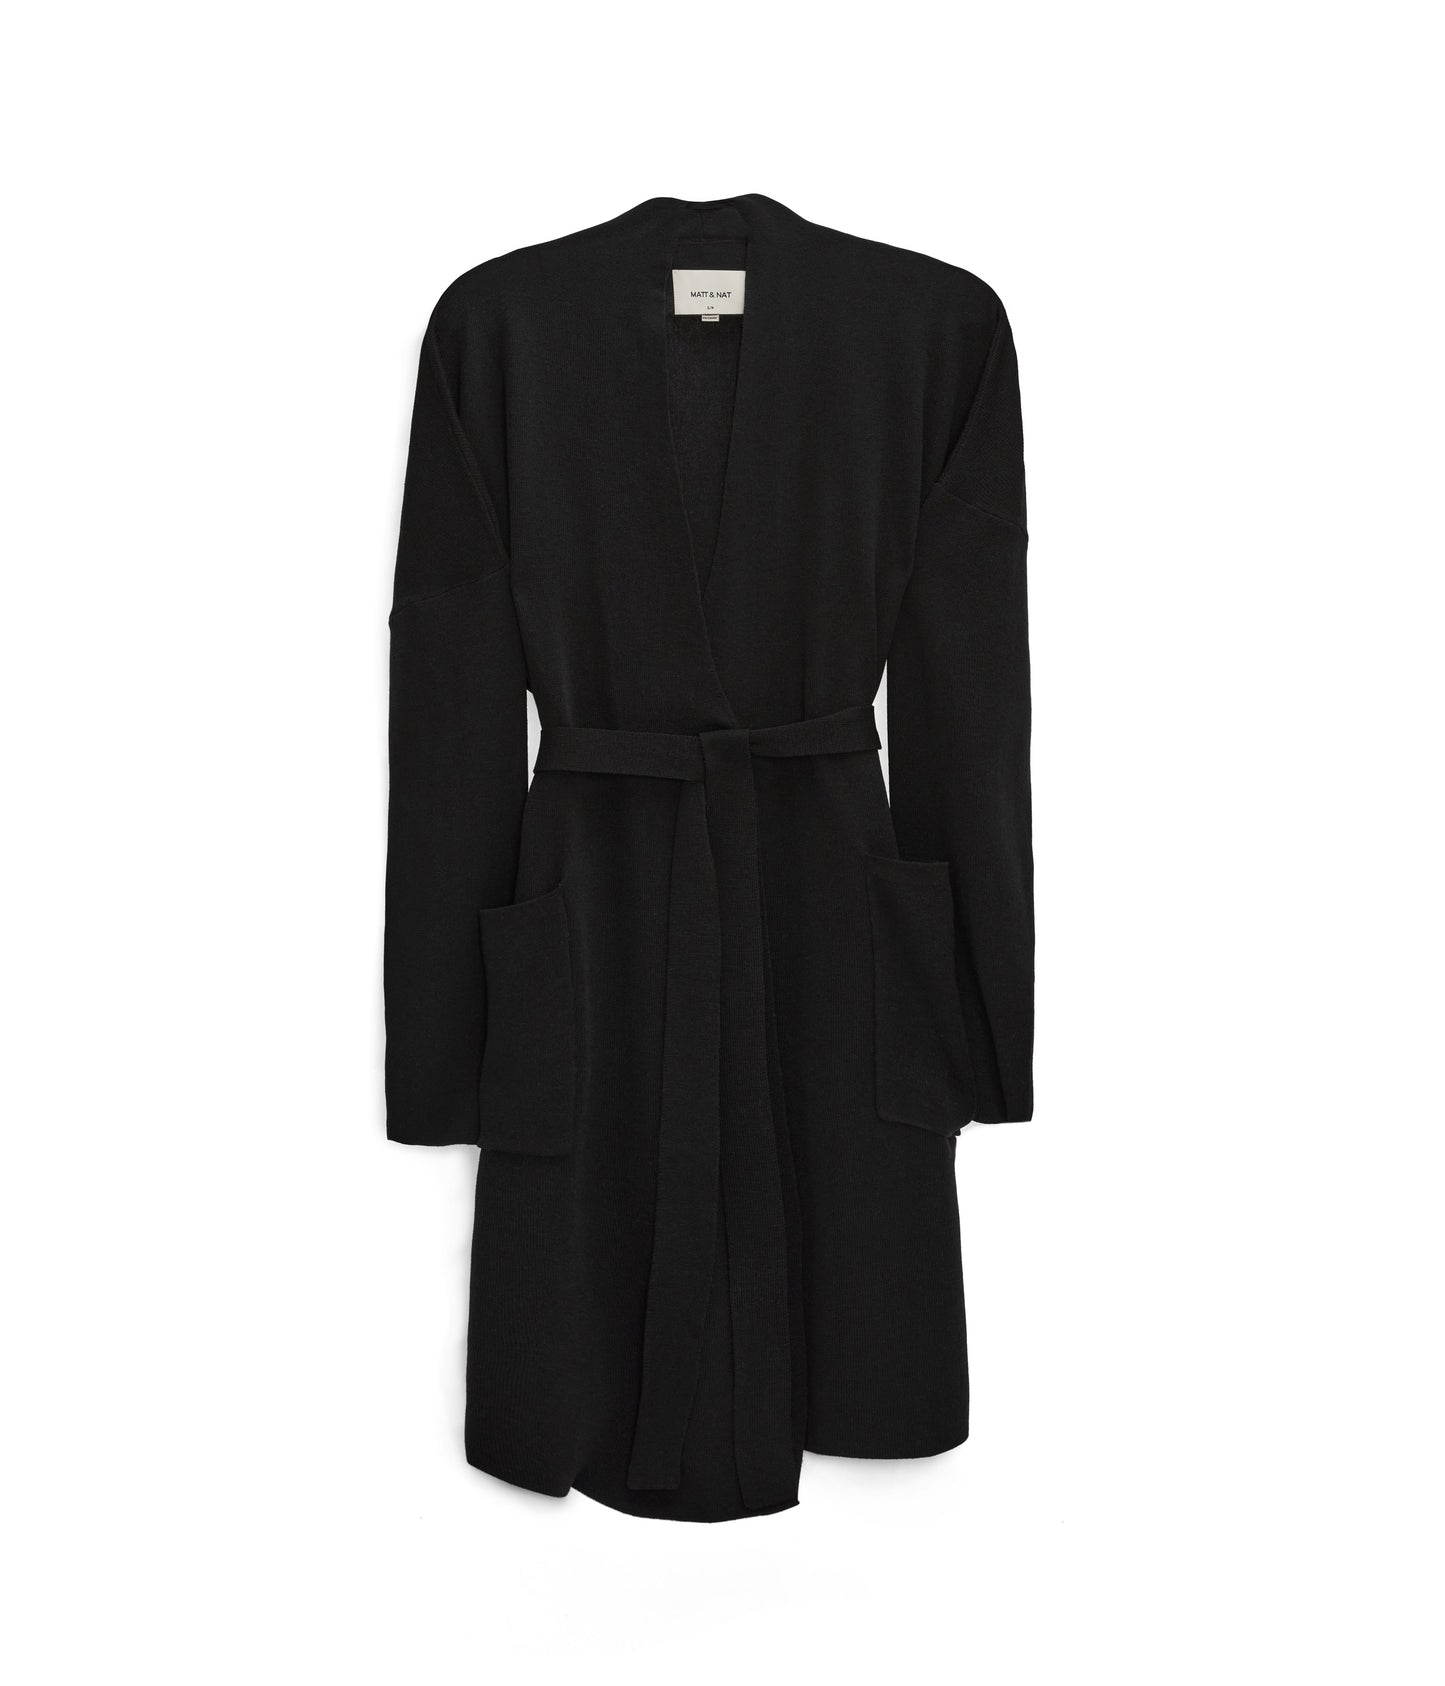 CAROL Long Sleeve Cardigan | Color: Black - variant::black